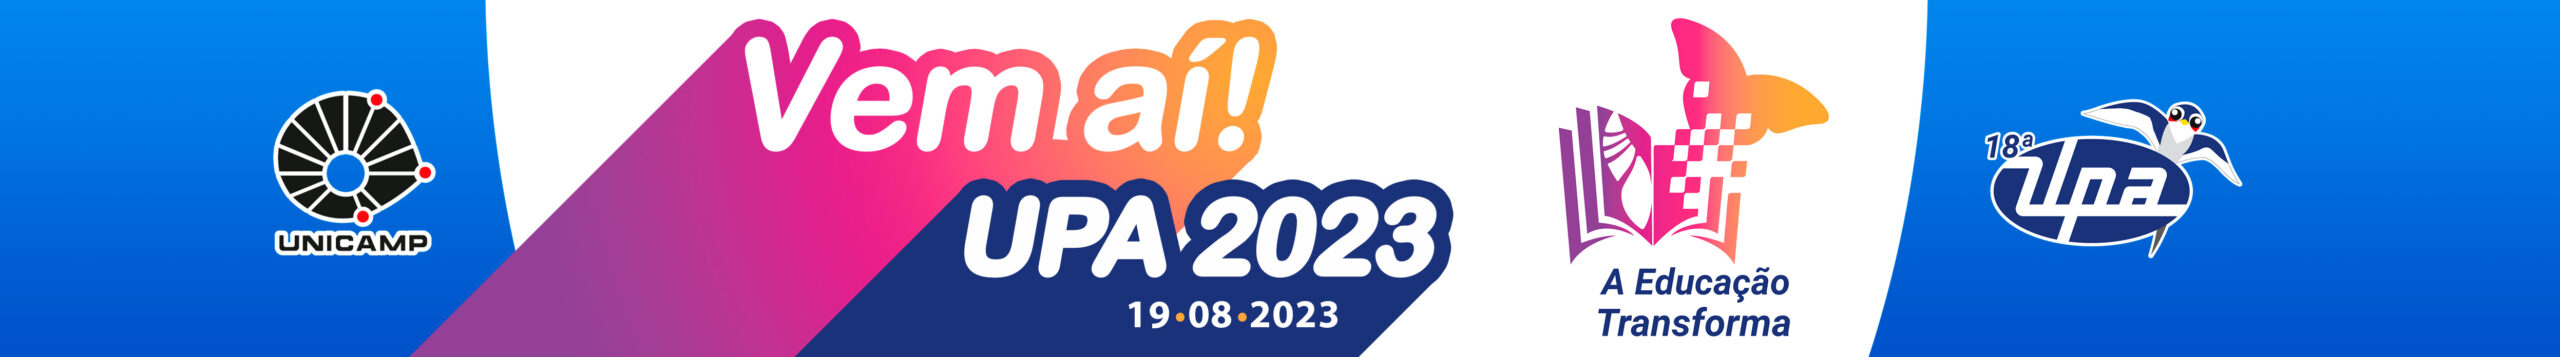 Banner UPA 2023